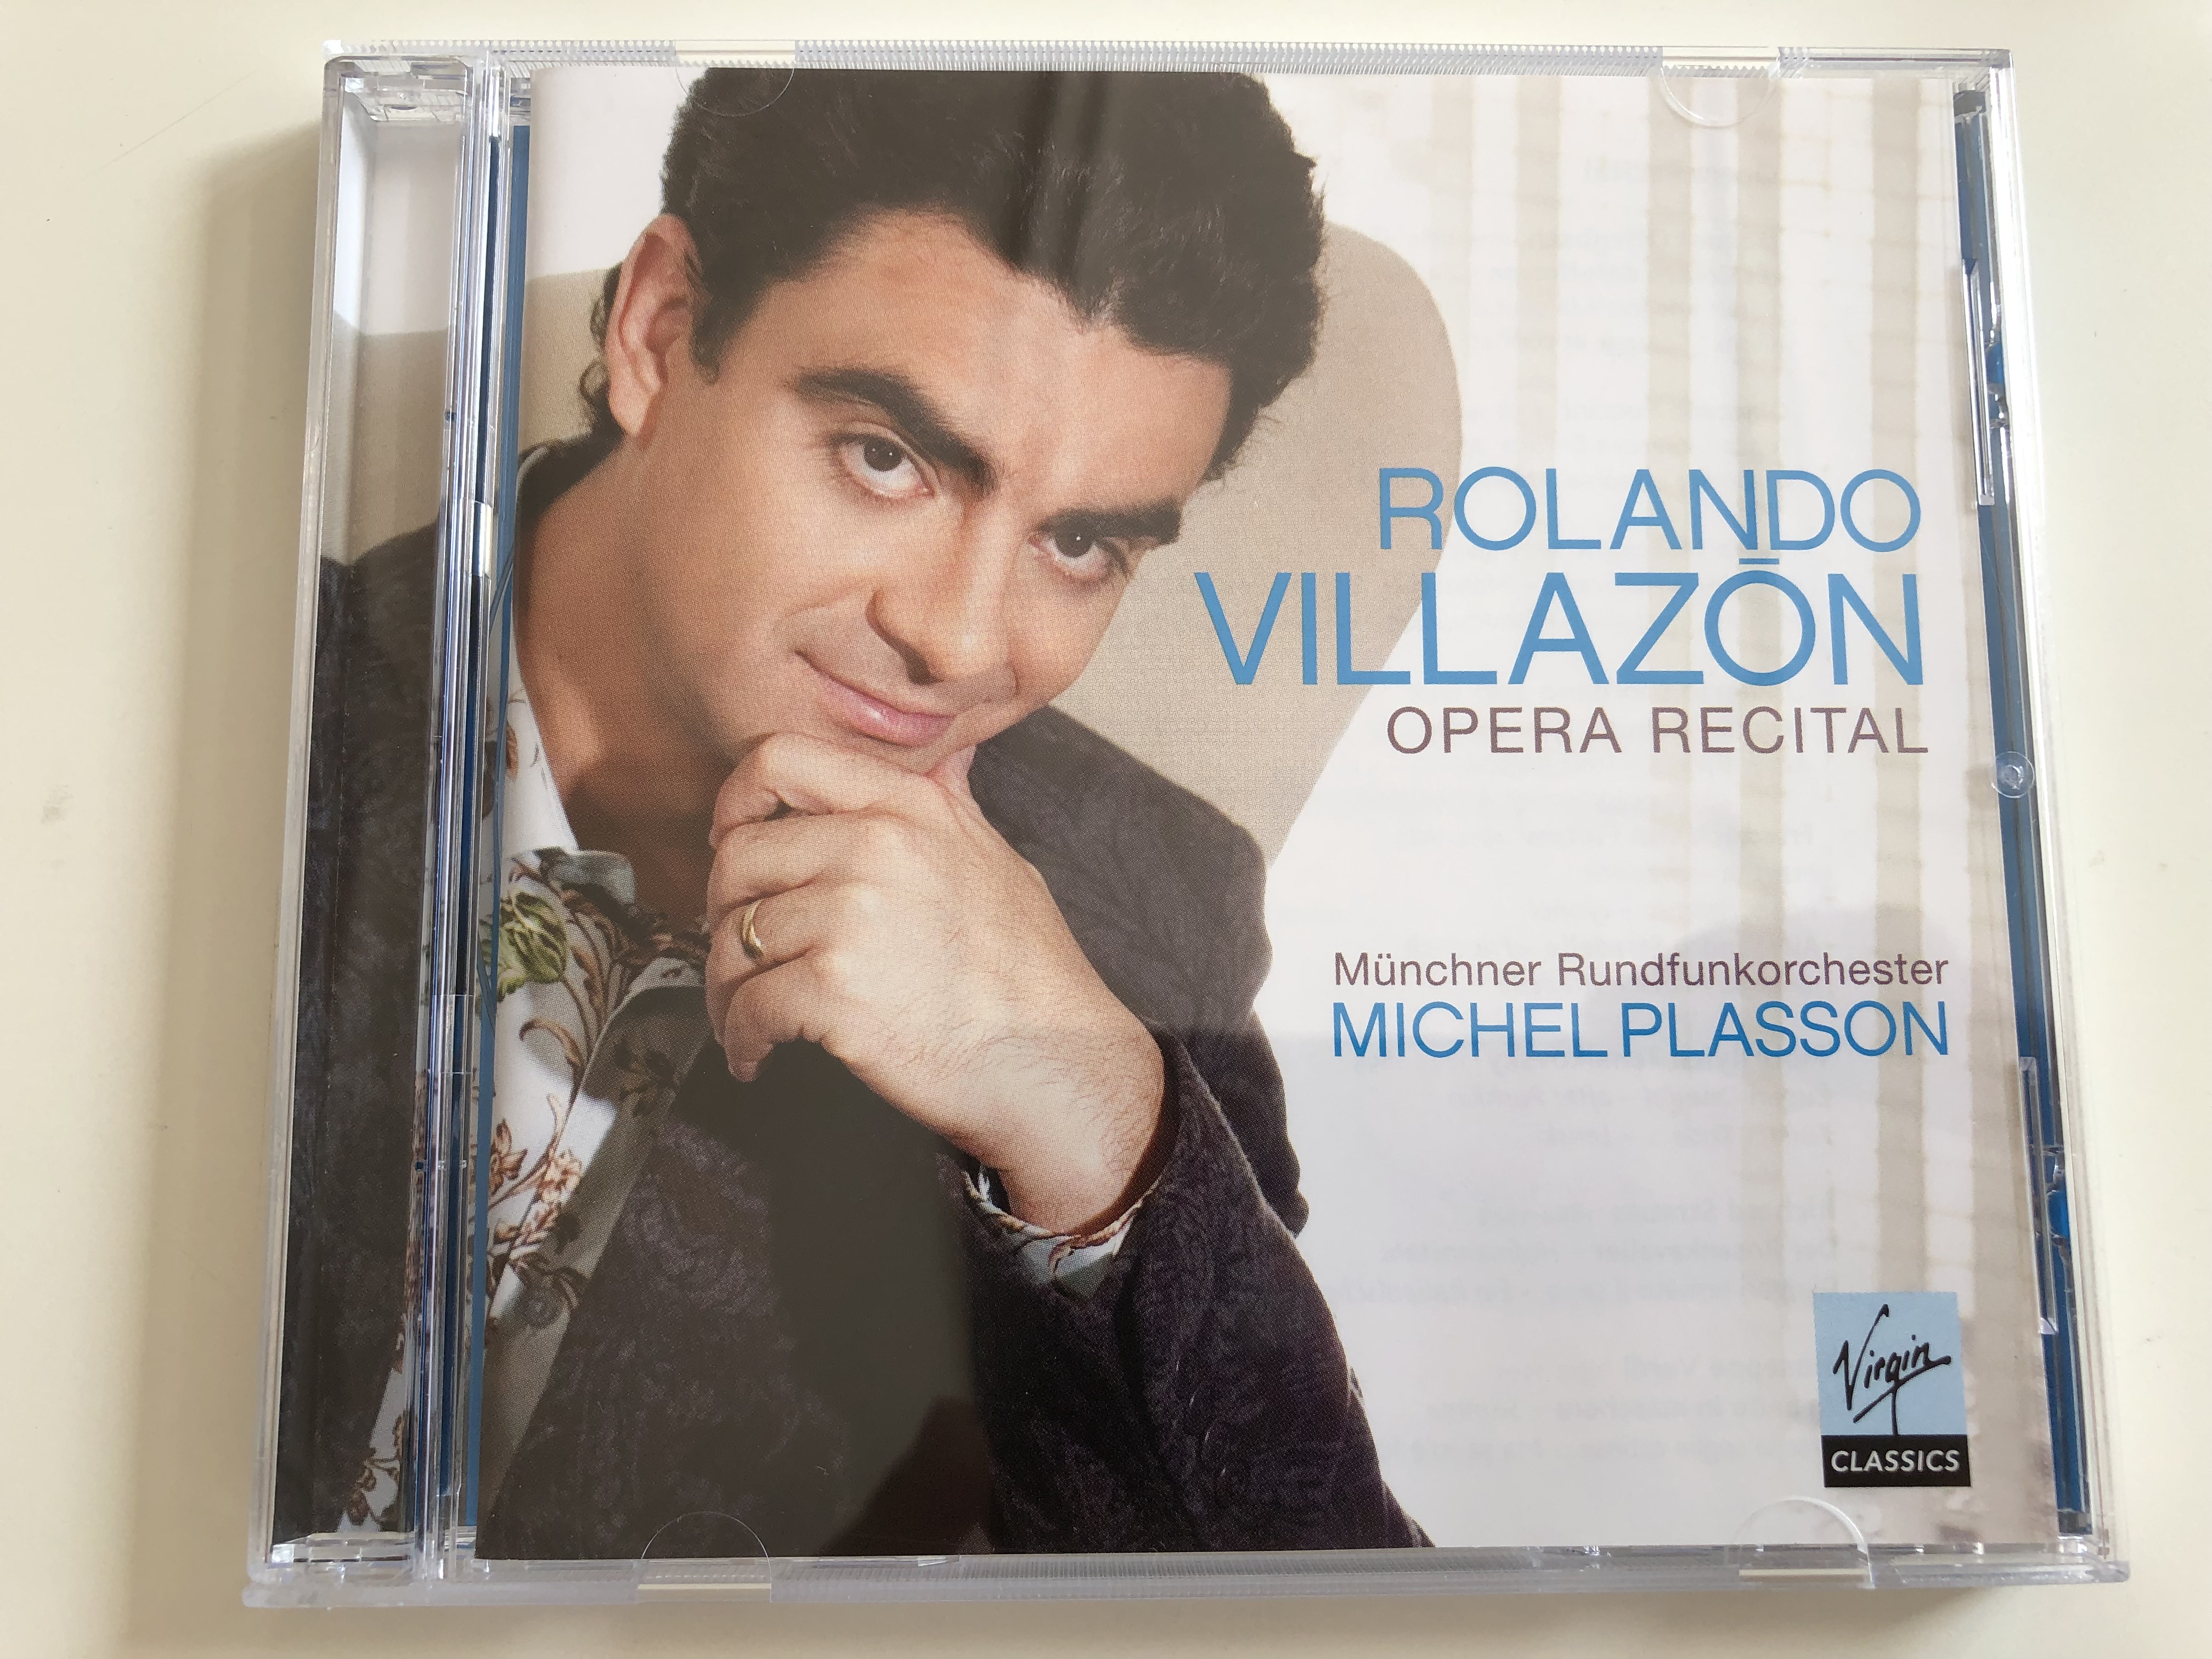 rolando-villazon-opera-recital-m-nchner-rundfunkorchester-conducted-by-michel-plasson-virgin-classics-audio-cd-2006-1-.jpg